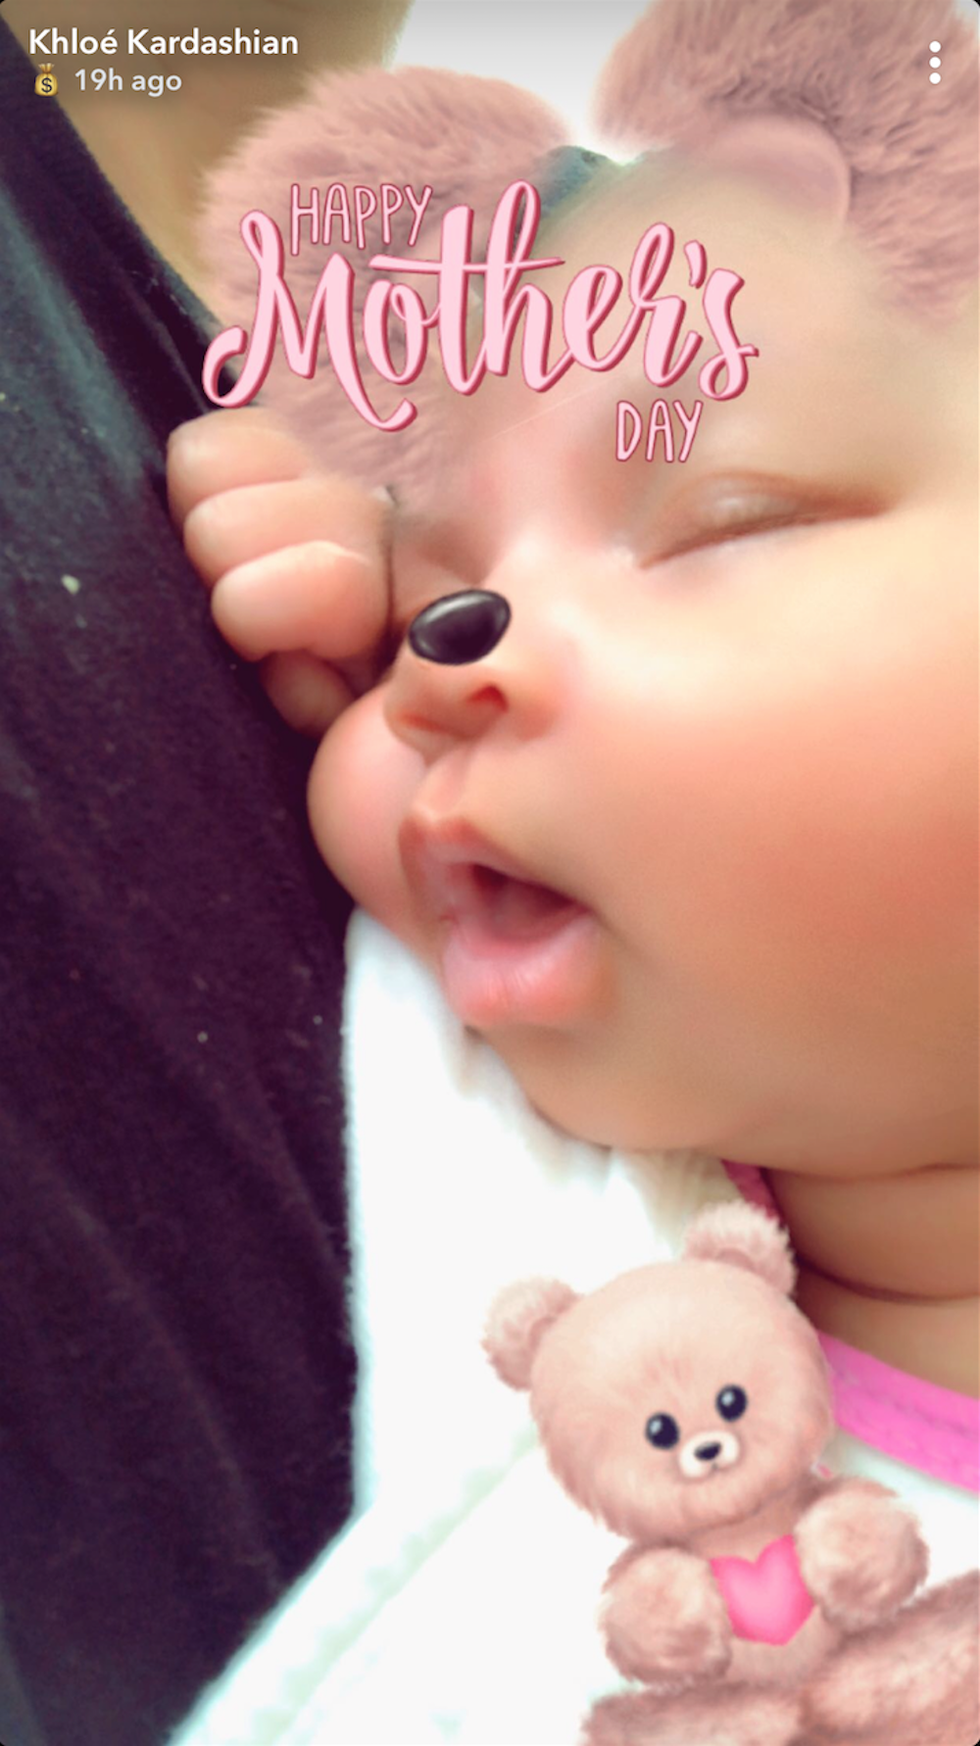 Child, Pink, Skin, Cheek, Nose, Toddler, Smile, Hand, Finger, Photo caption, 